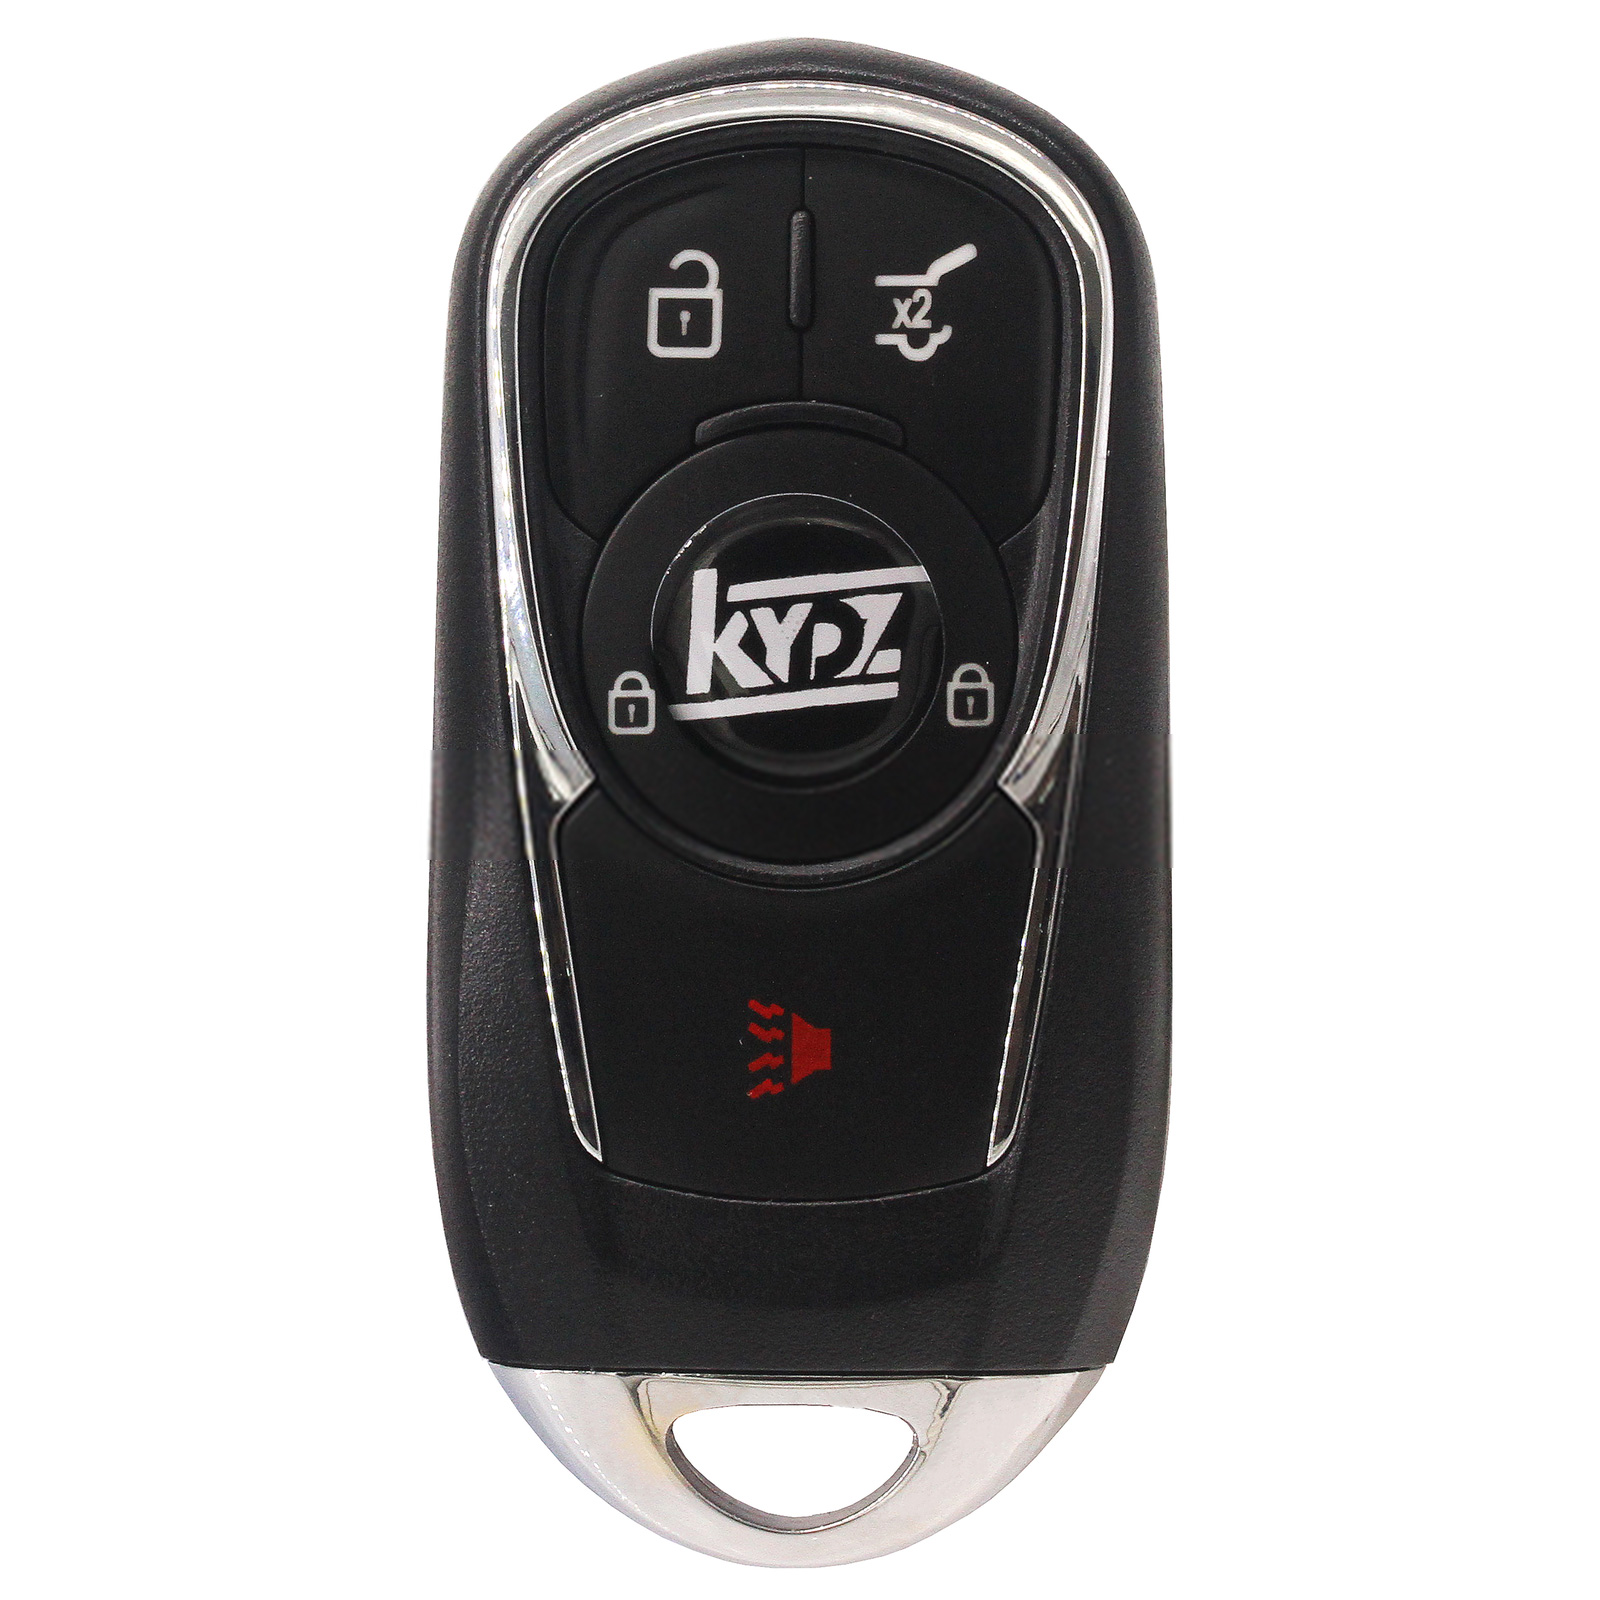 KYDZ03 GM25-3+1 Universal Smart Key US Version - Pack of 5